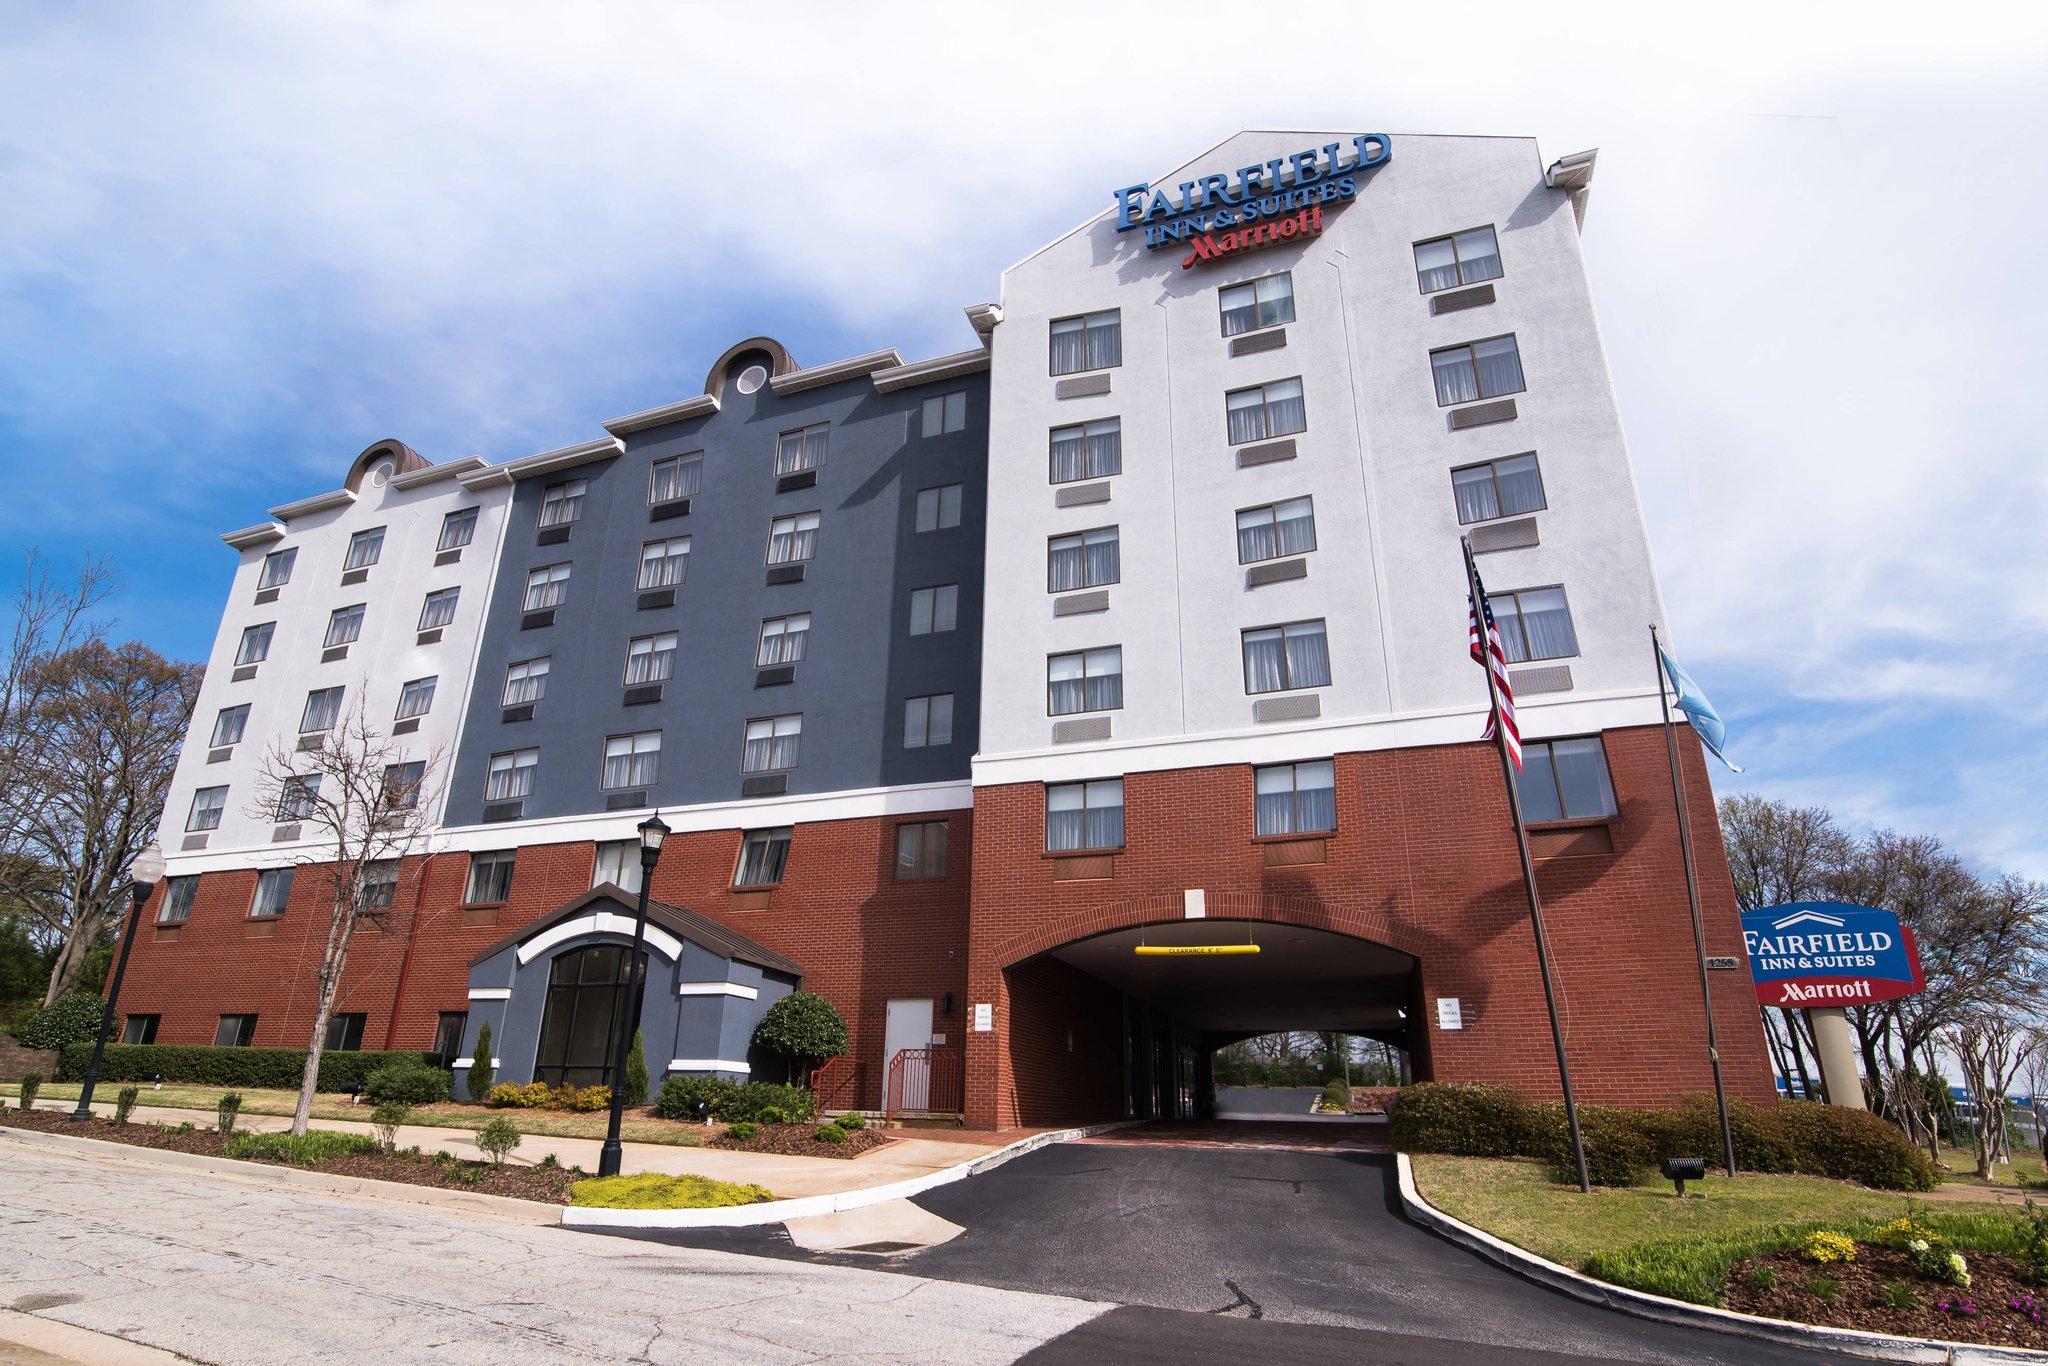 Fairfield Inn & Suites Atlanta Airport North in East Point, GA